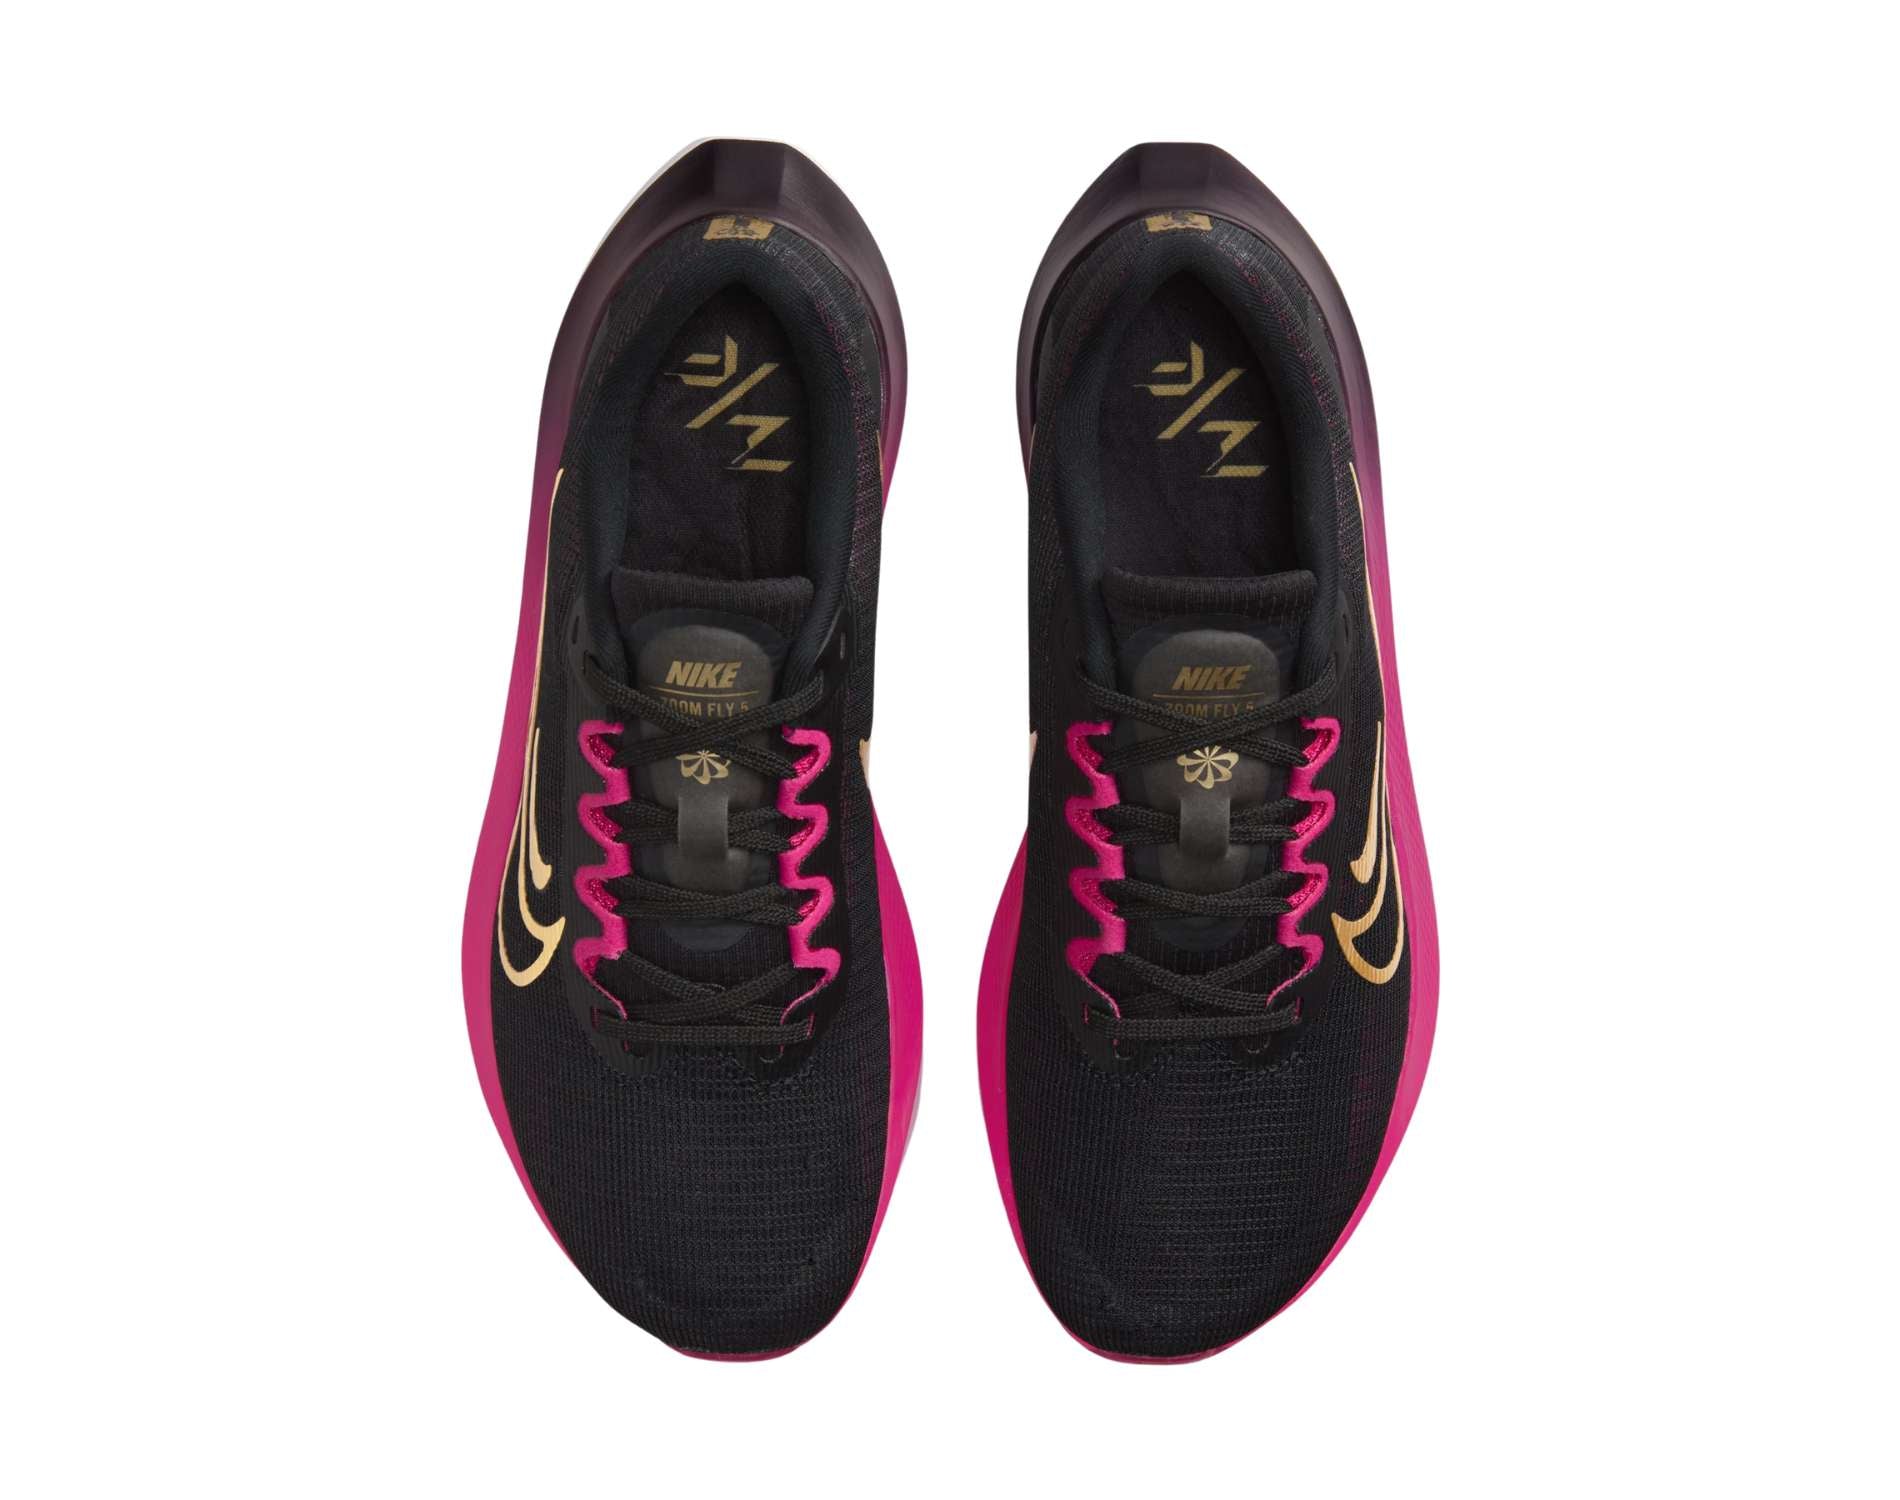 Nke Zoom Fly 5 womens b running shoe in  Black metallic gold white fireberry colour